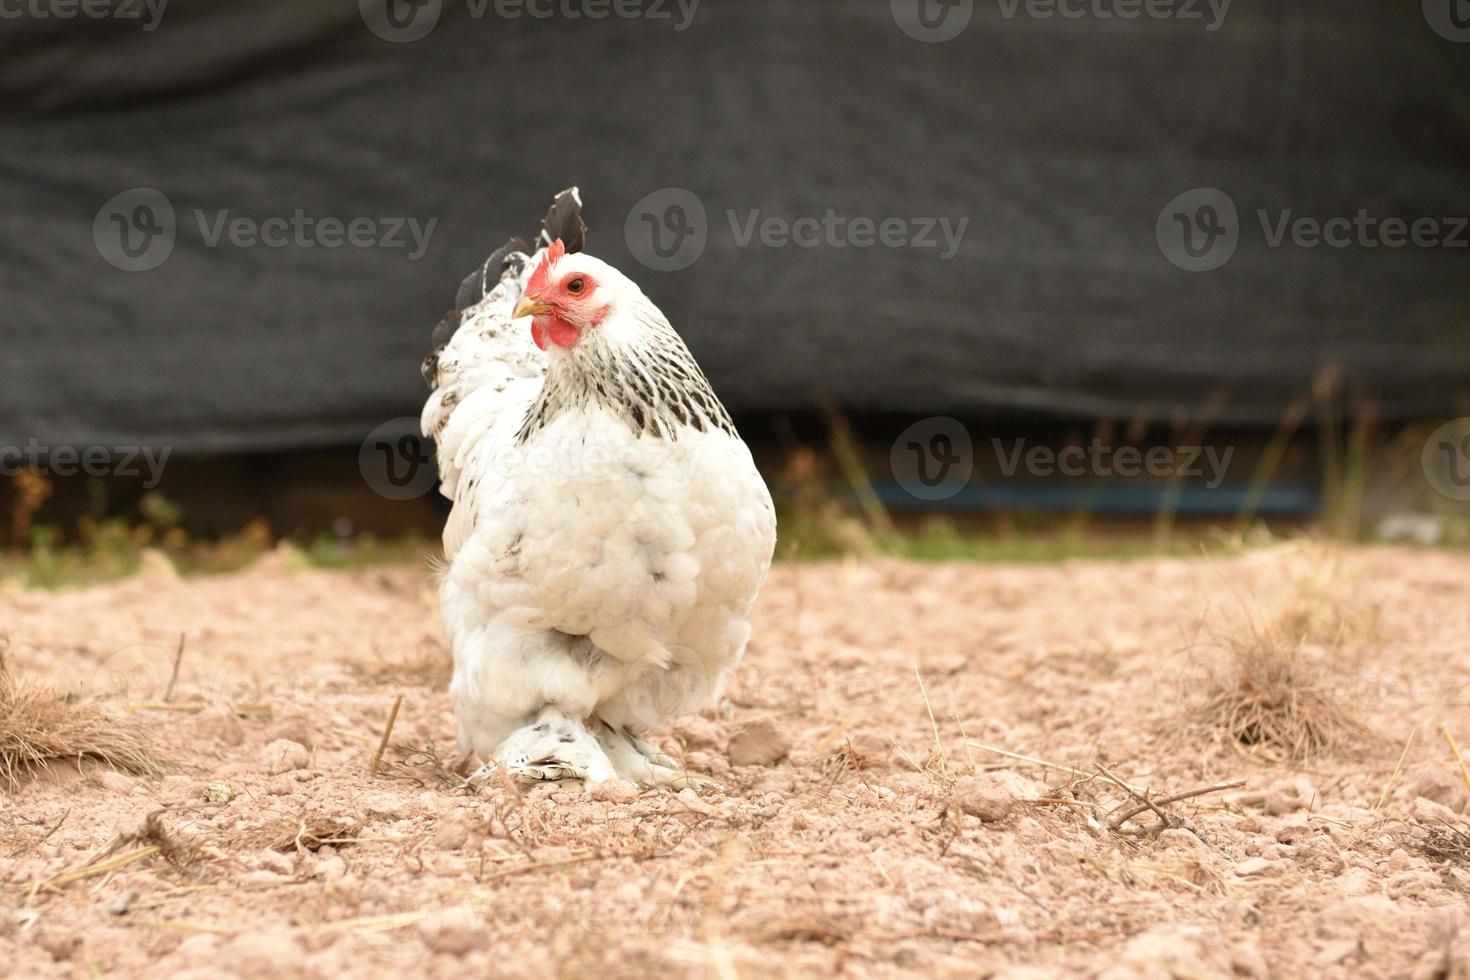 Giant chicken Brahma standing on ground in Farm area photo